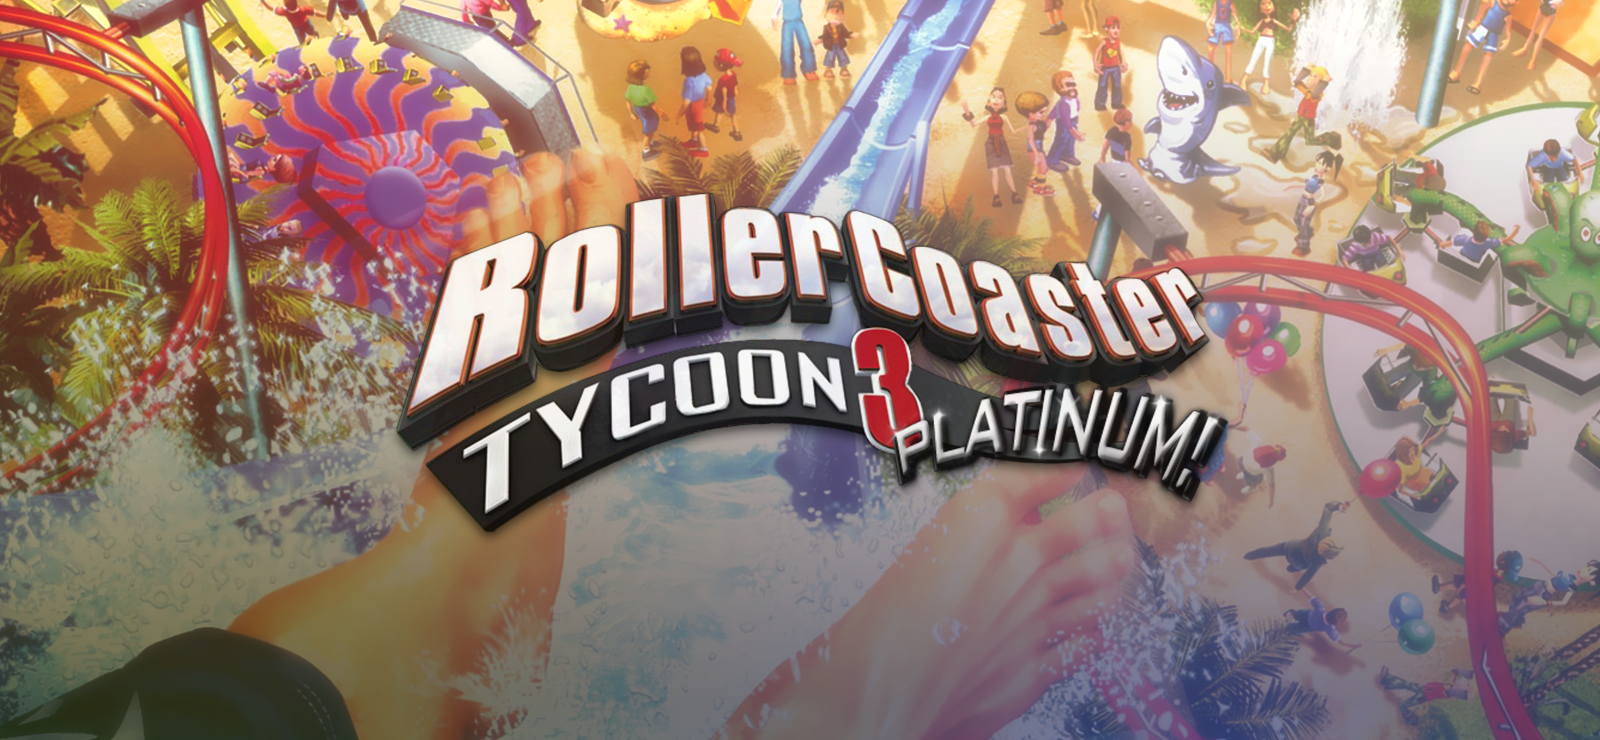 Rollercoaster Tycoon 3: Platinum!